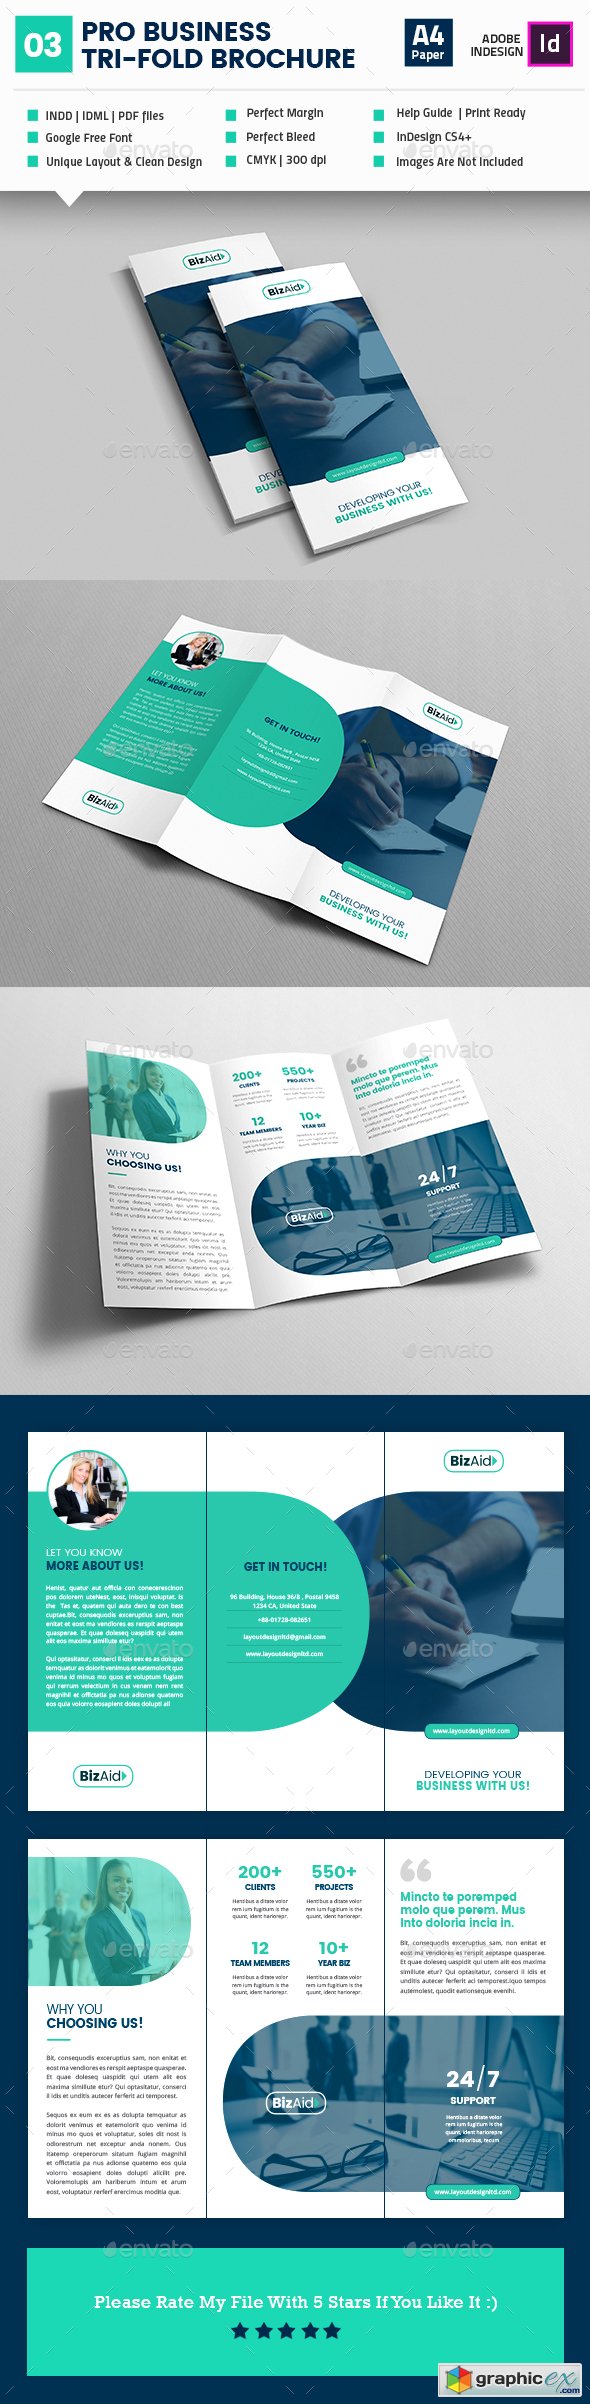 Pro Business Tri-Fold Brochure V03